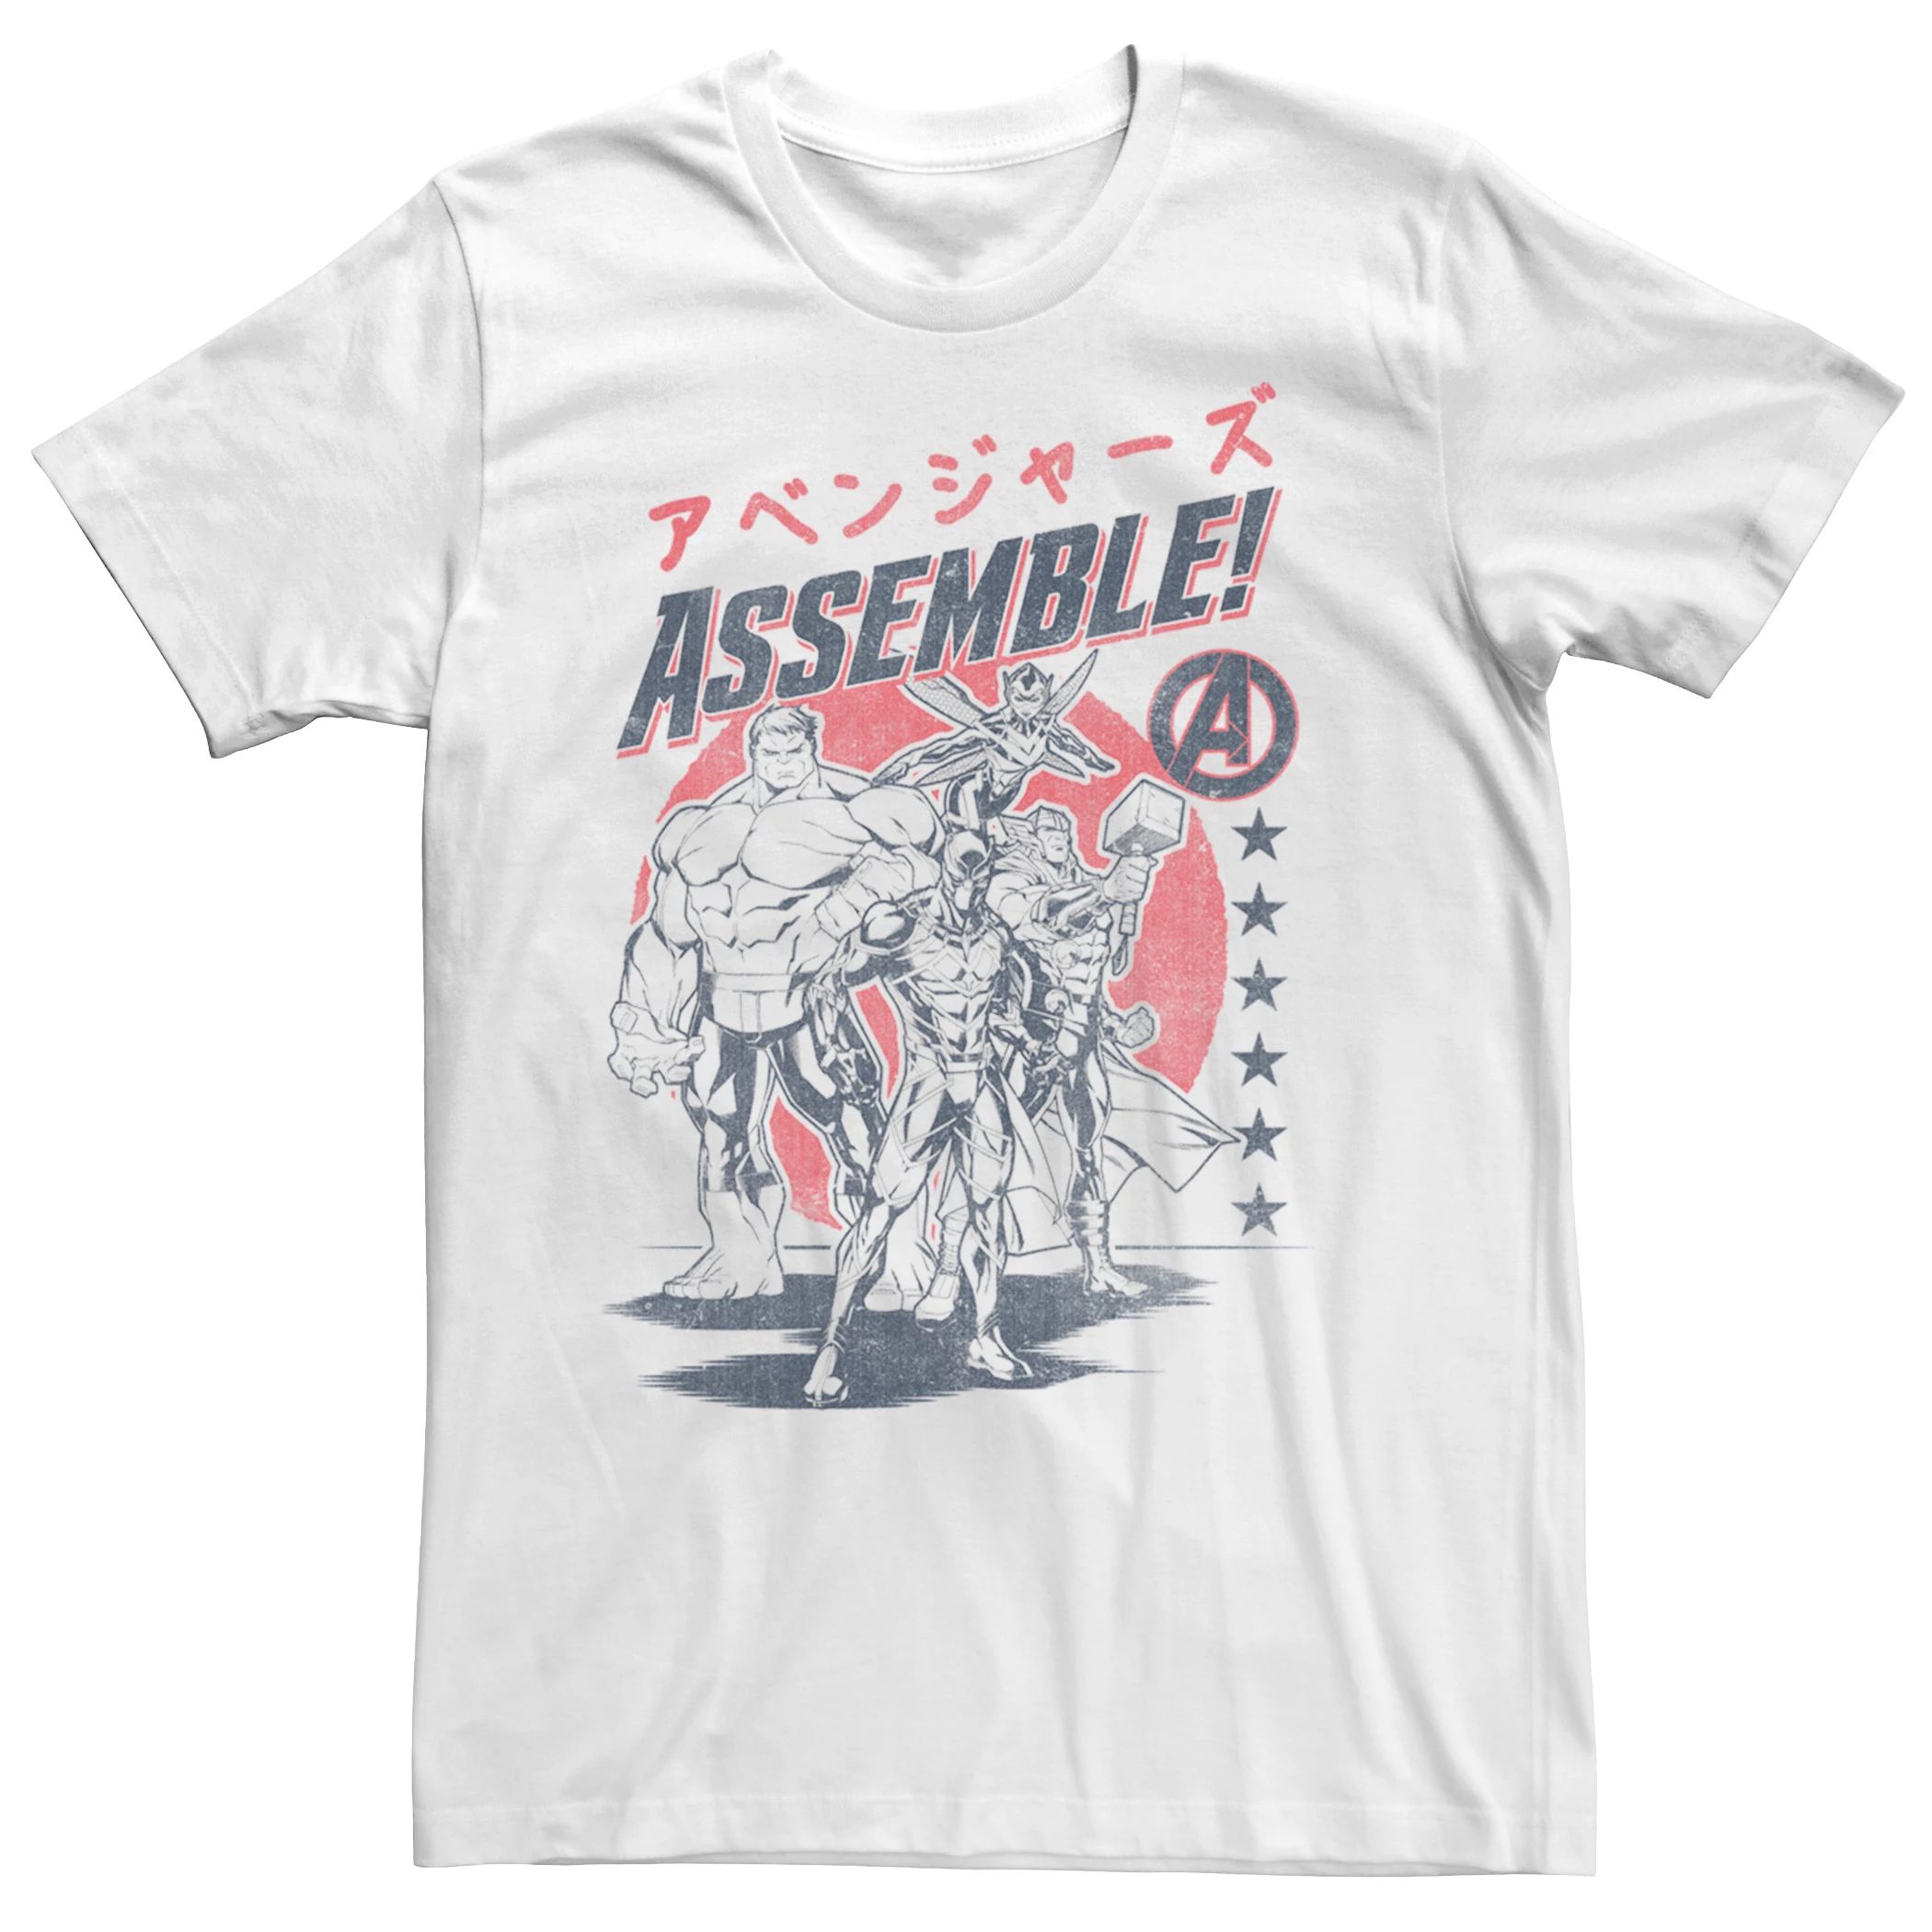 Мужская футболка с рисунком Marvel Avengers Assemble Licensed Character